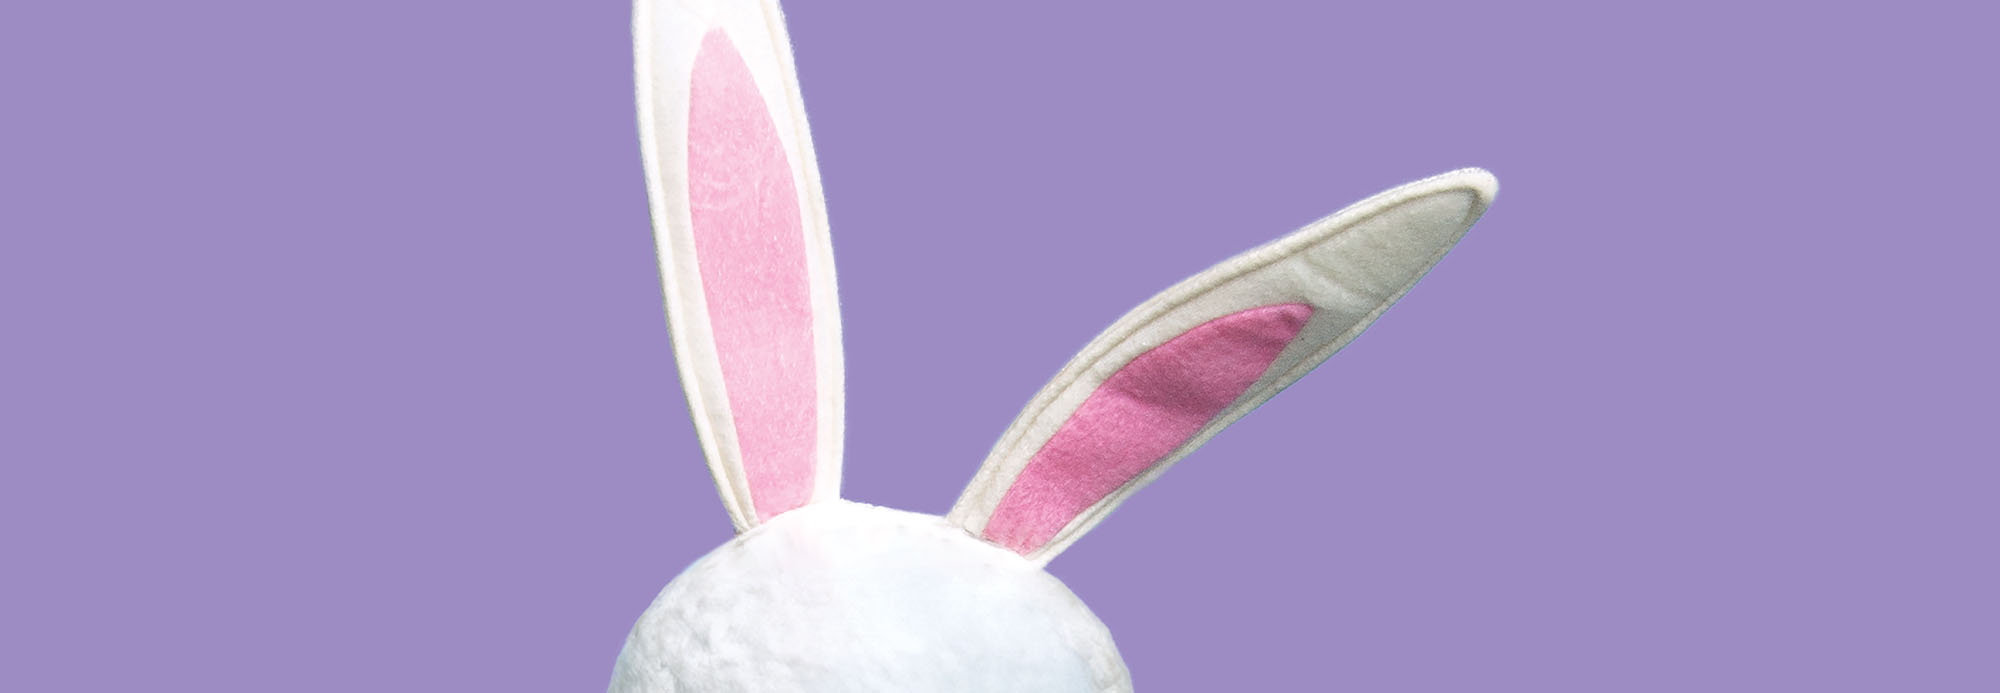 Felt Easter Bunny ears on a purple background